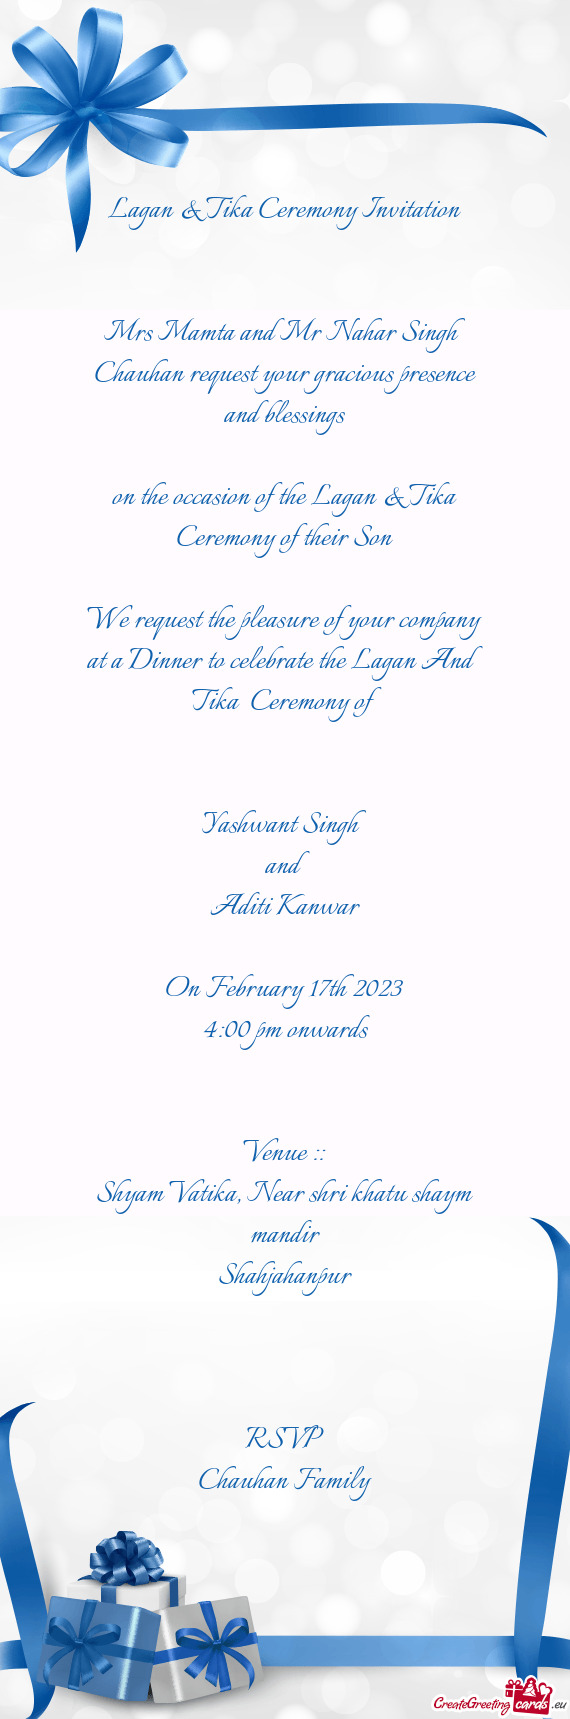 Lagan & Tika Ceremony Invitation